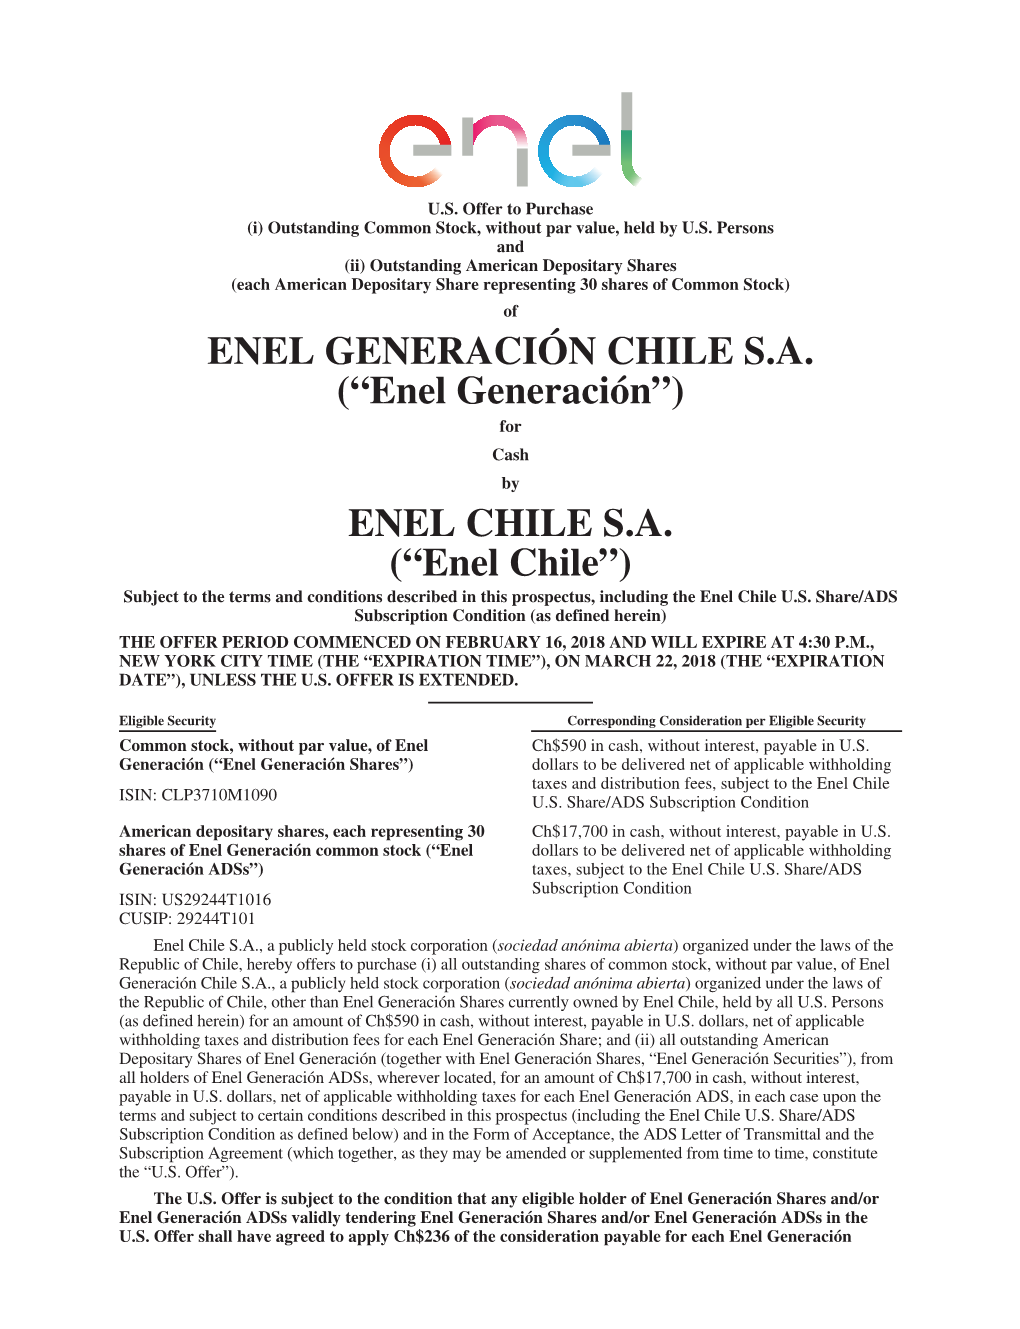 Prospectus, Including the Enel Chile U.S